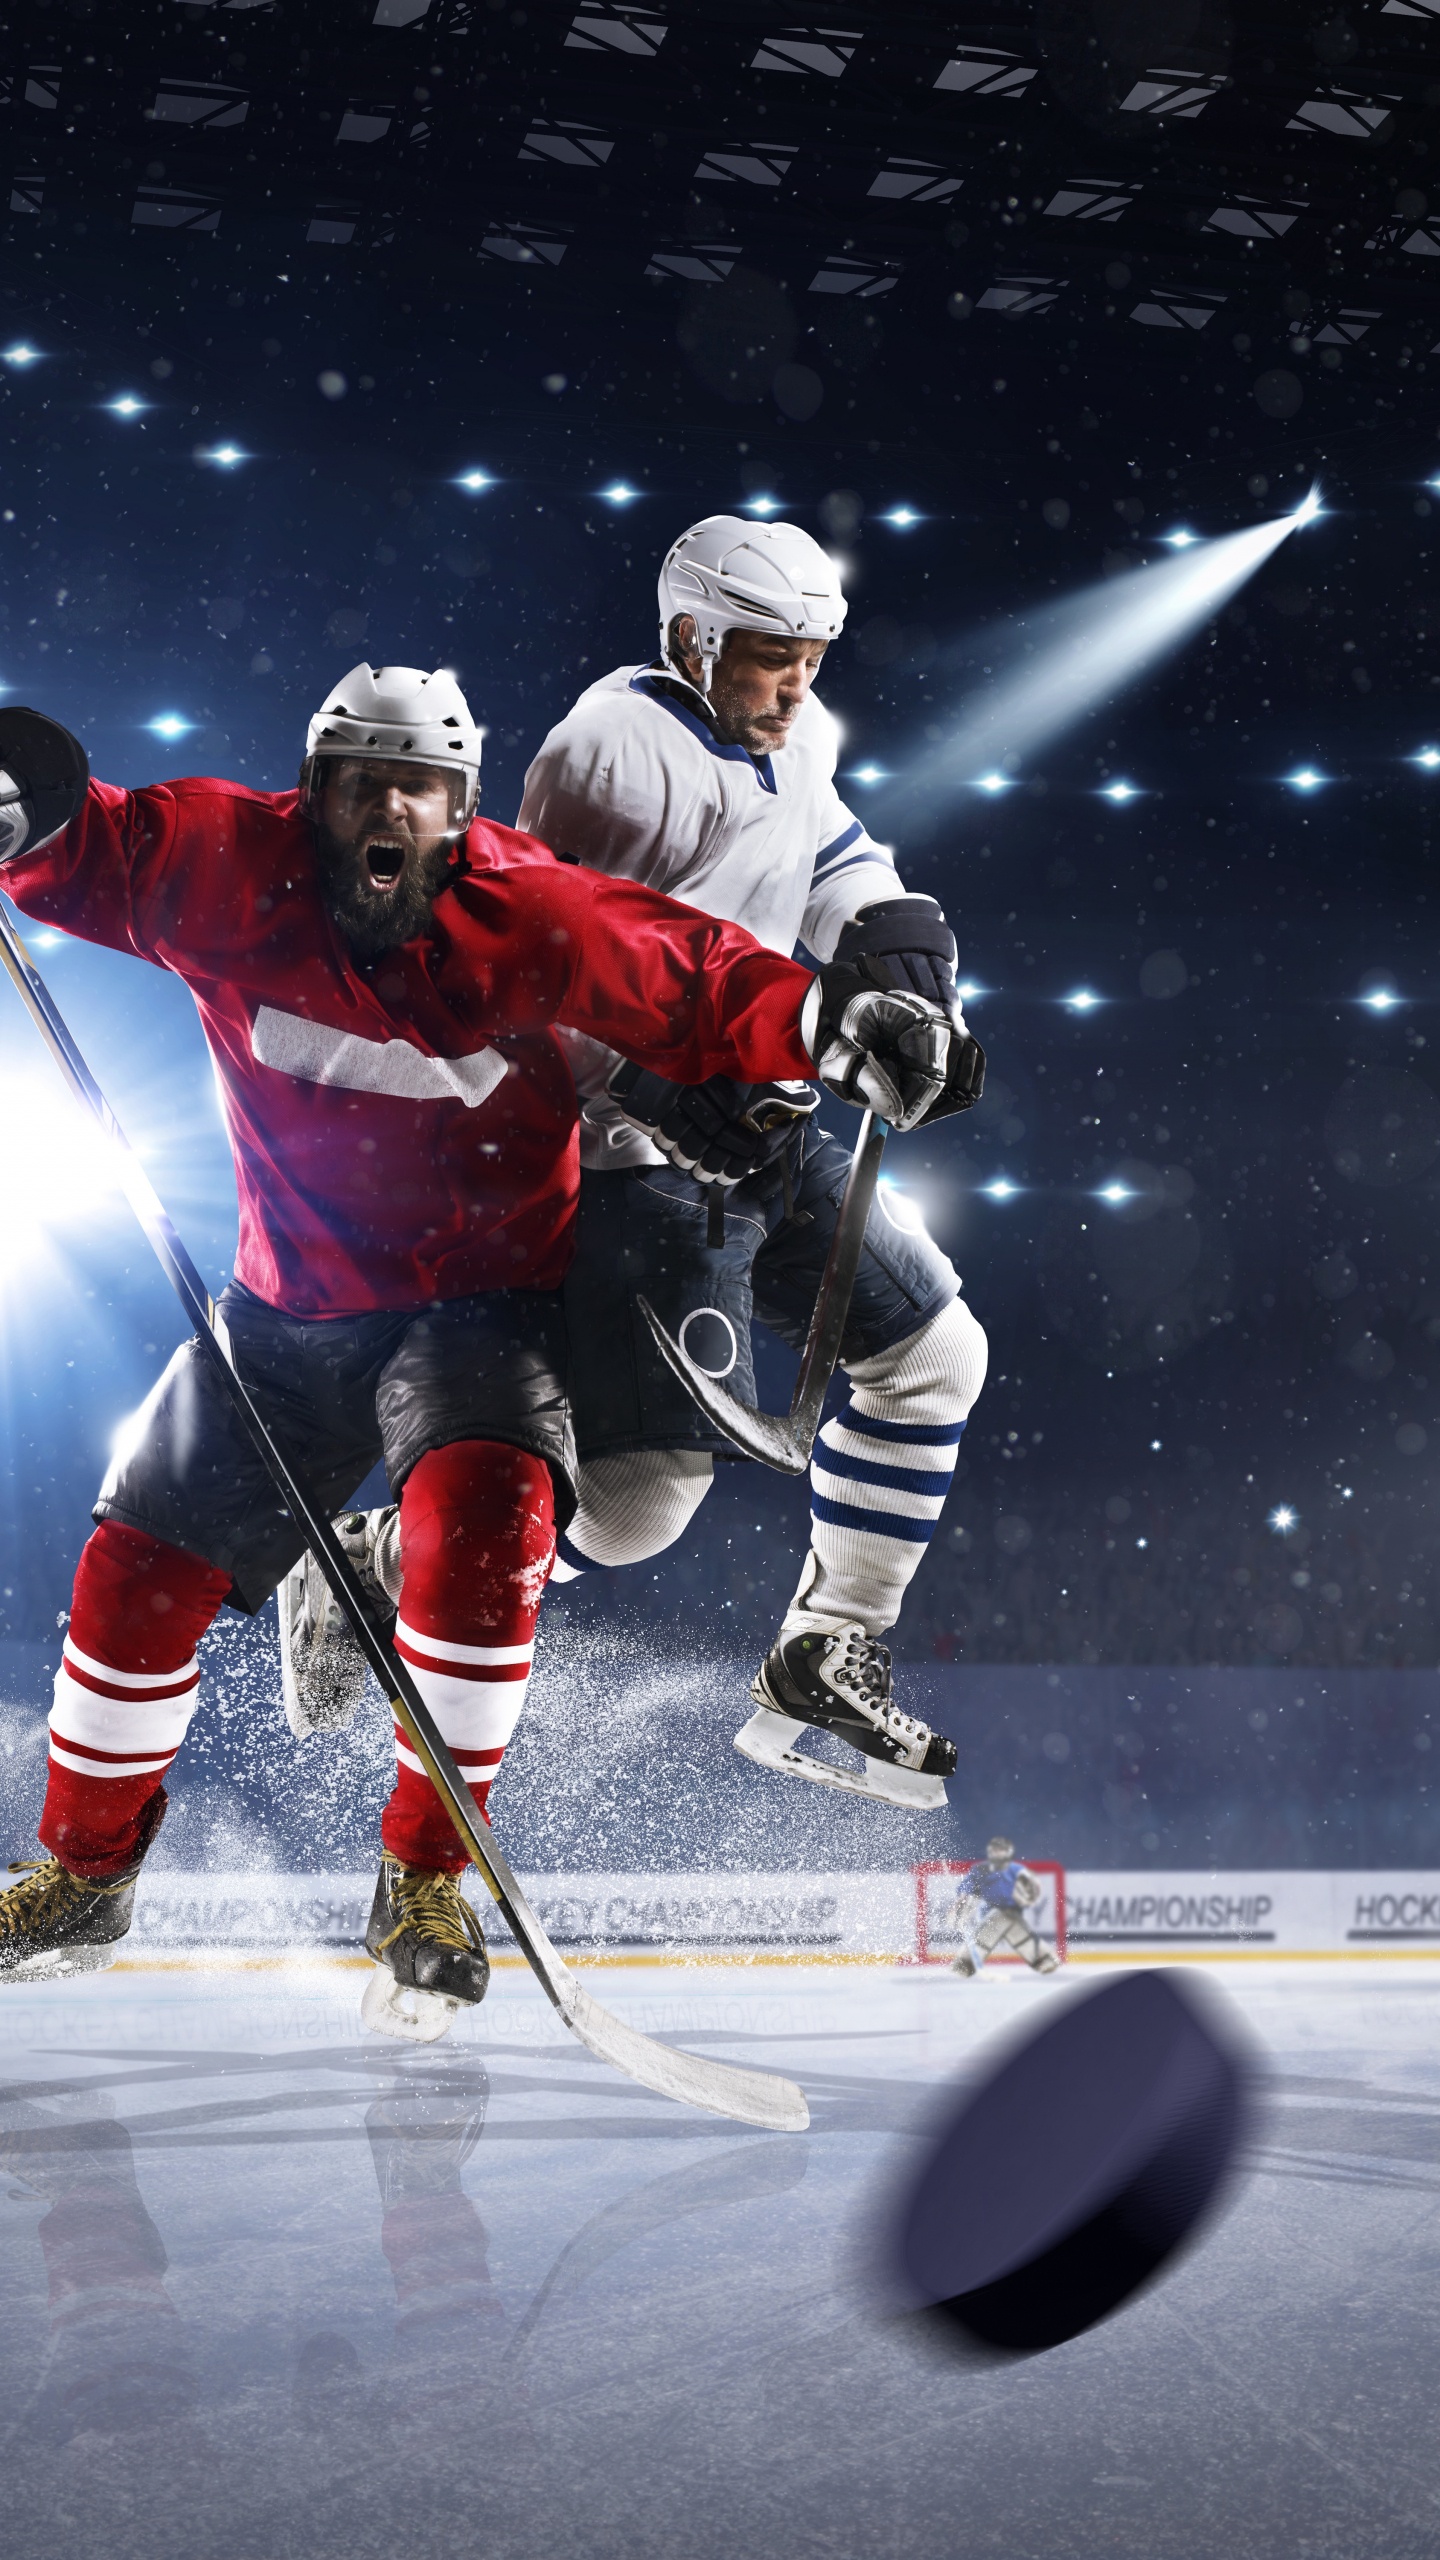 Ice Hockey Players on Ice Hockey Field. Wallpaper in 1440x2560 Resolution